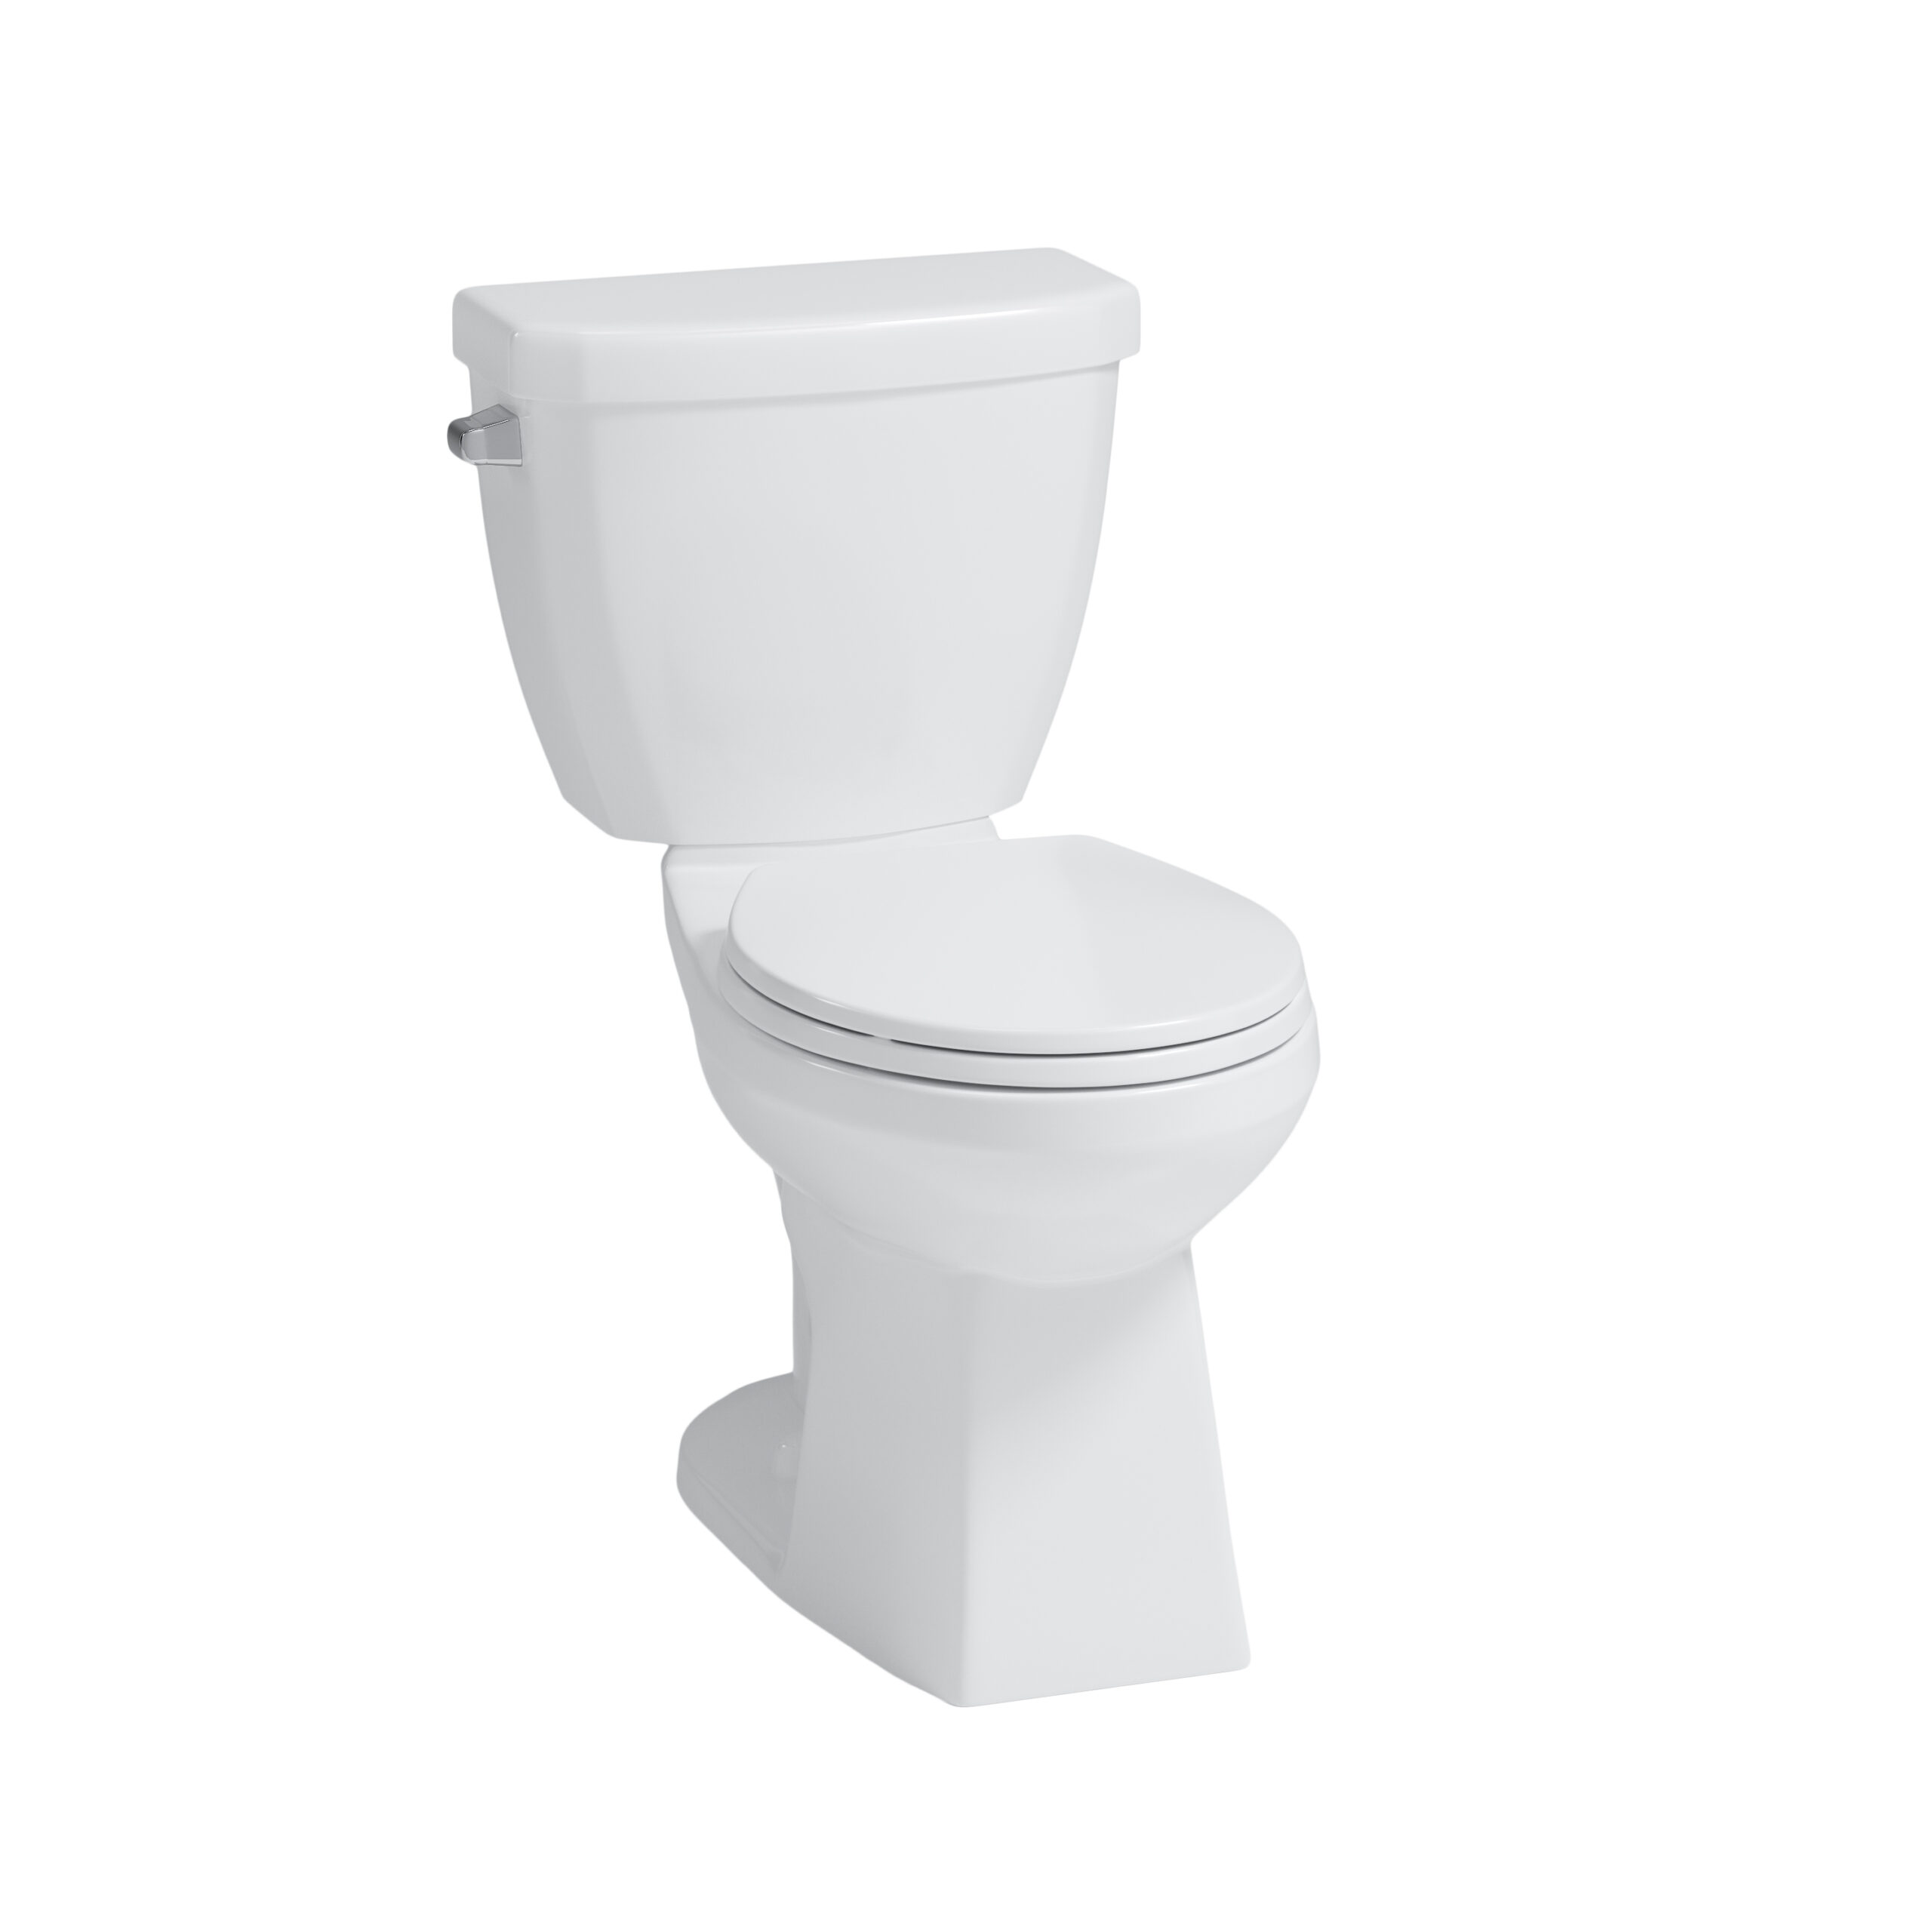 Carlin FLUSH GUARD Toilet - 4720FGFVU - Angle View Silo